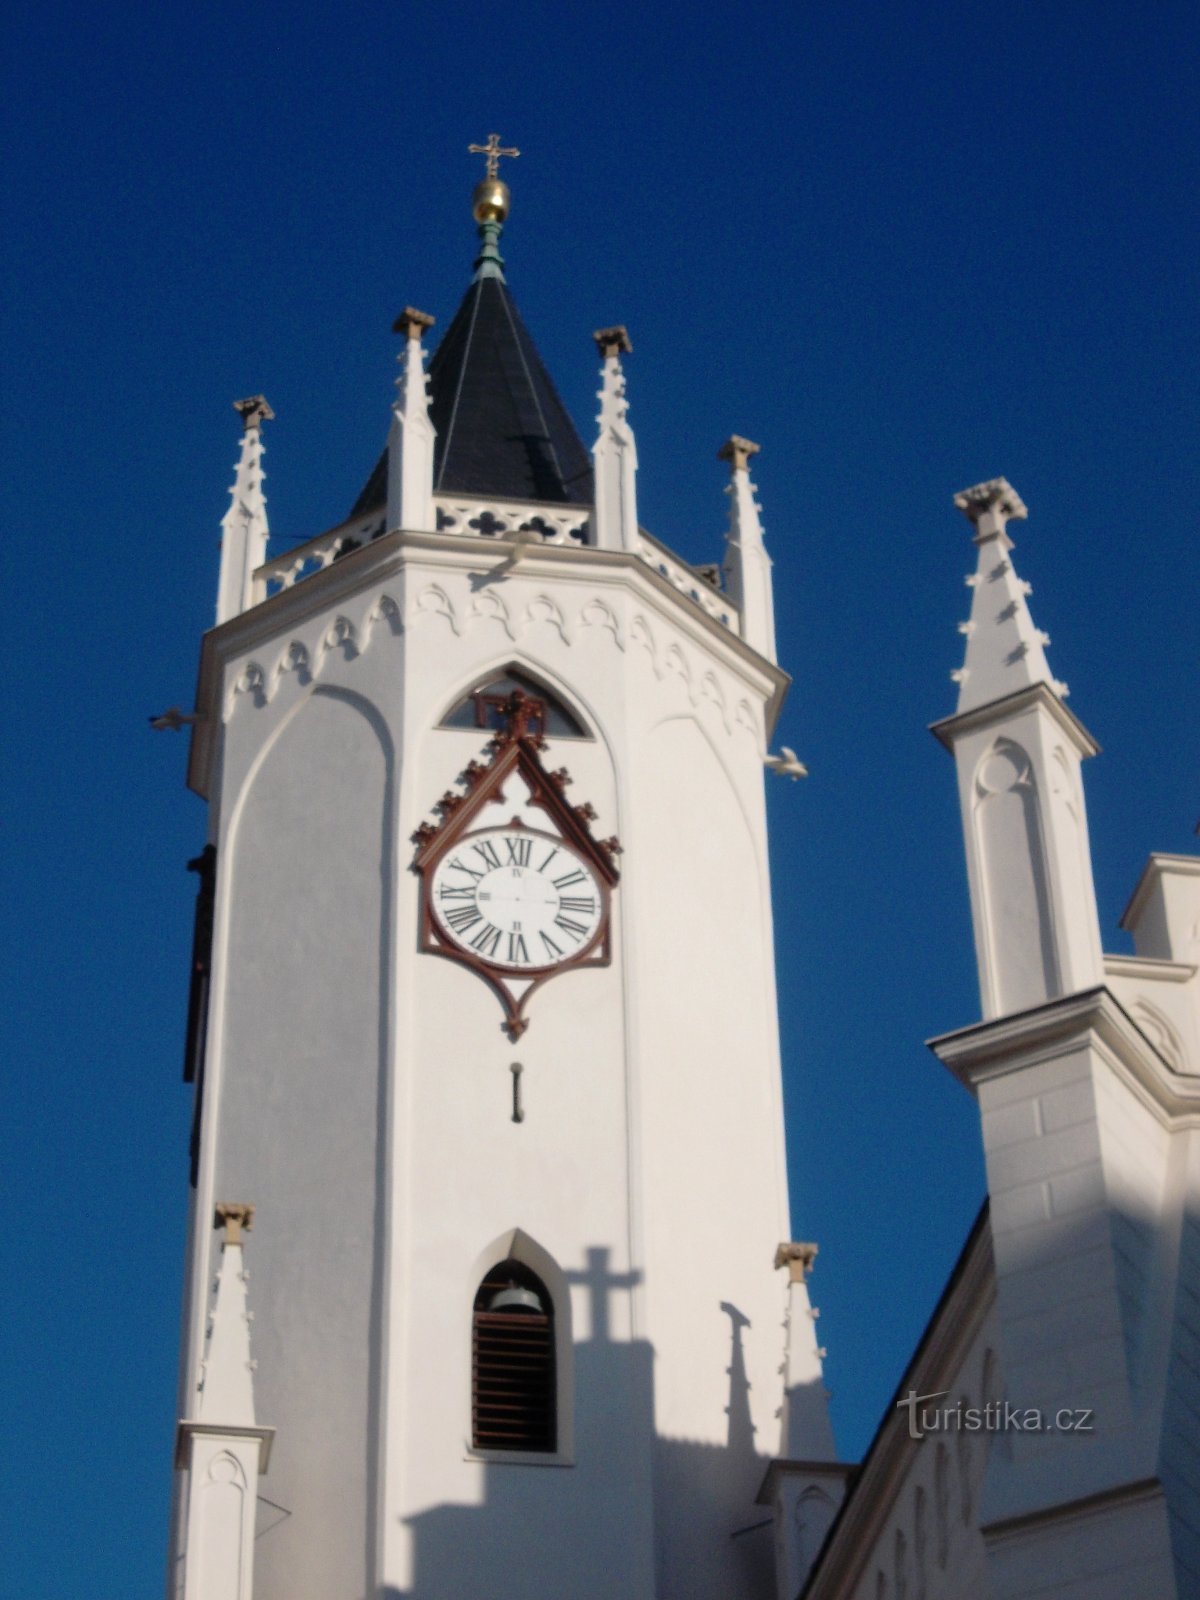 Uhrturm der Kirche